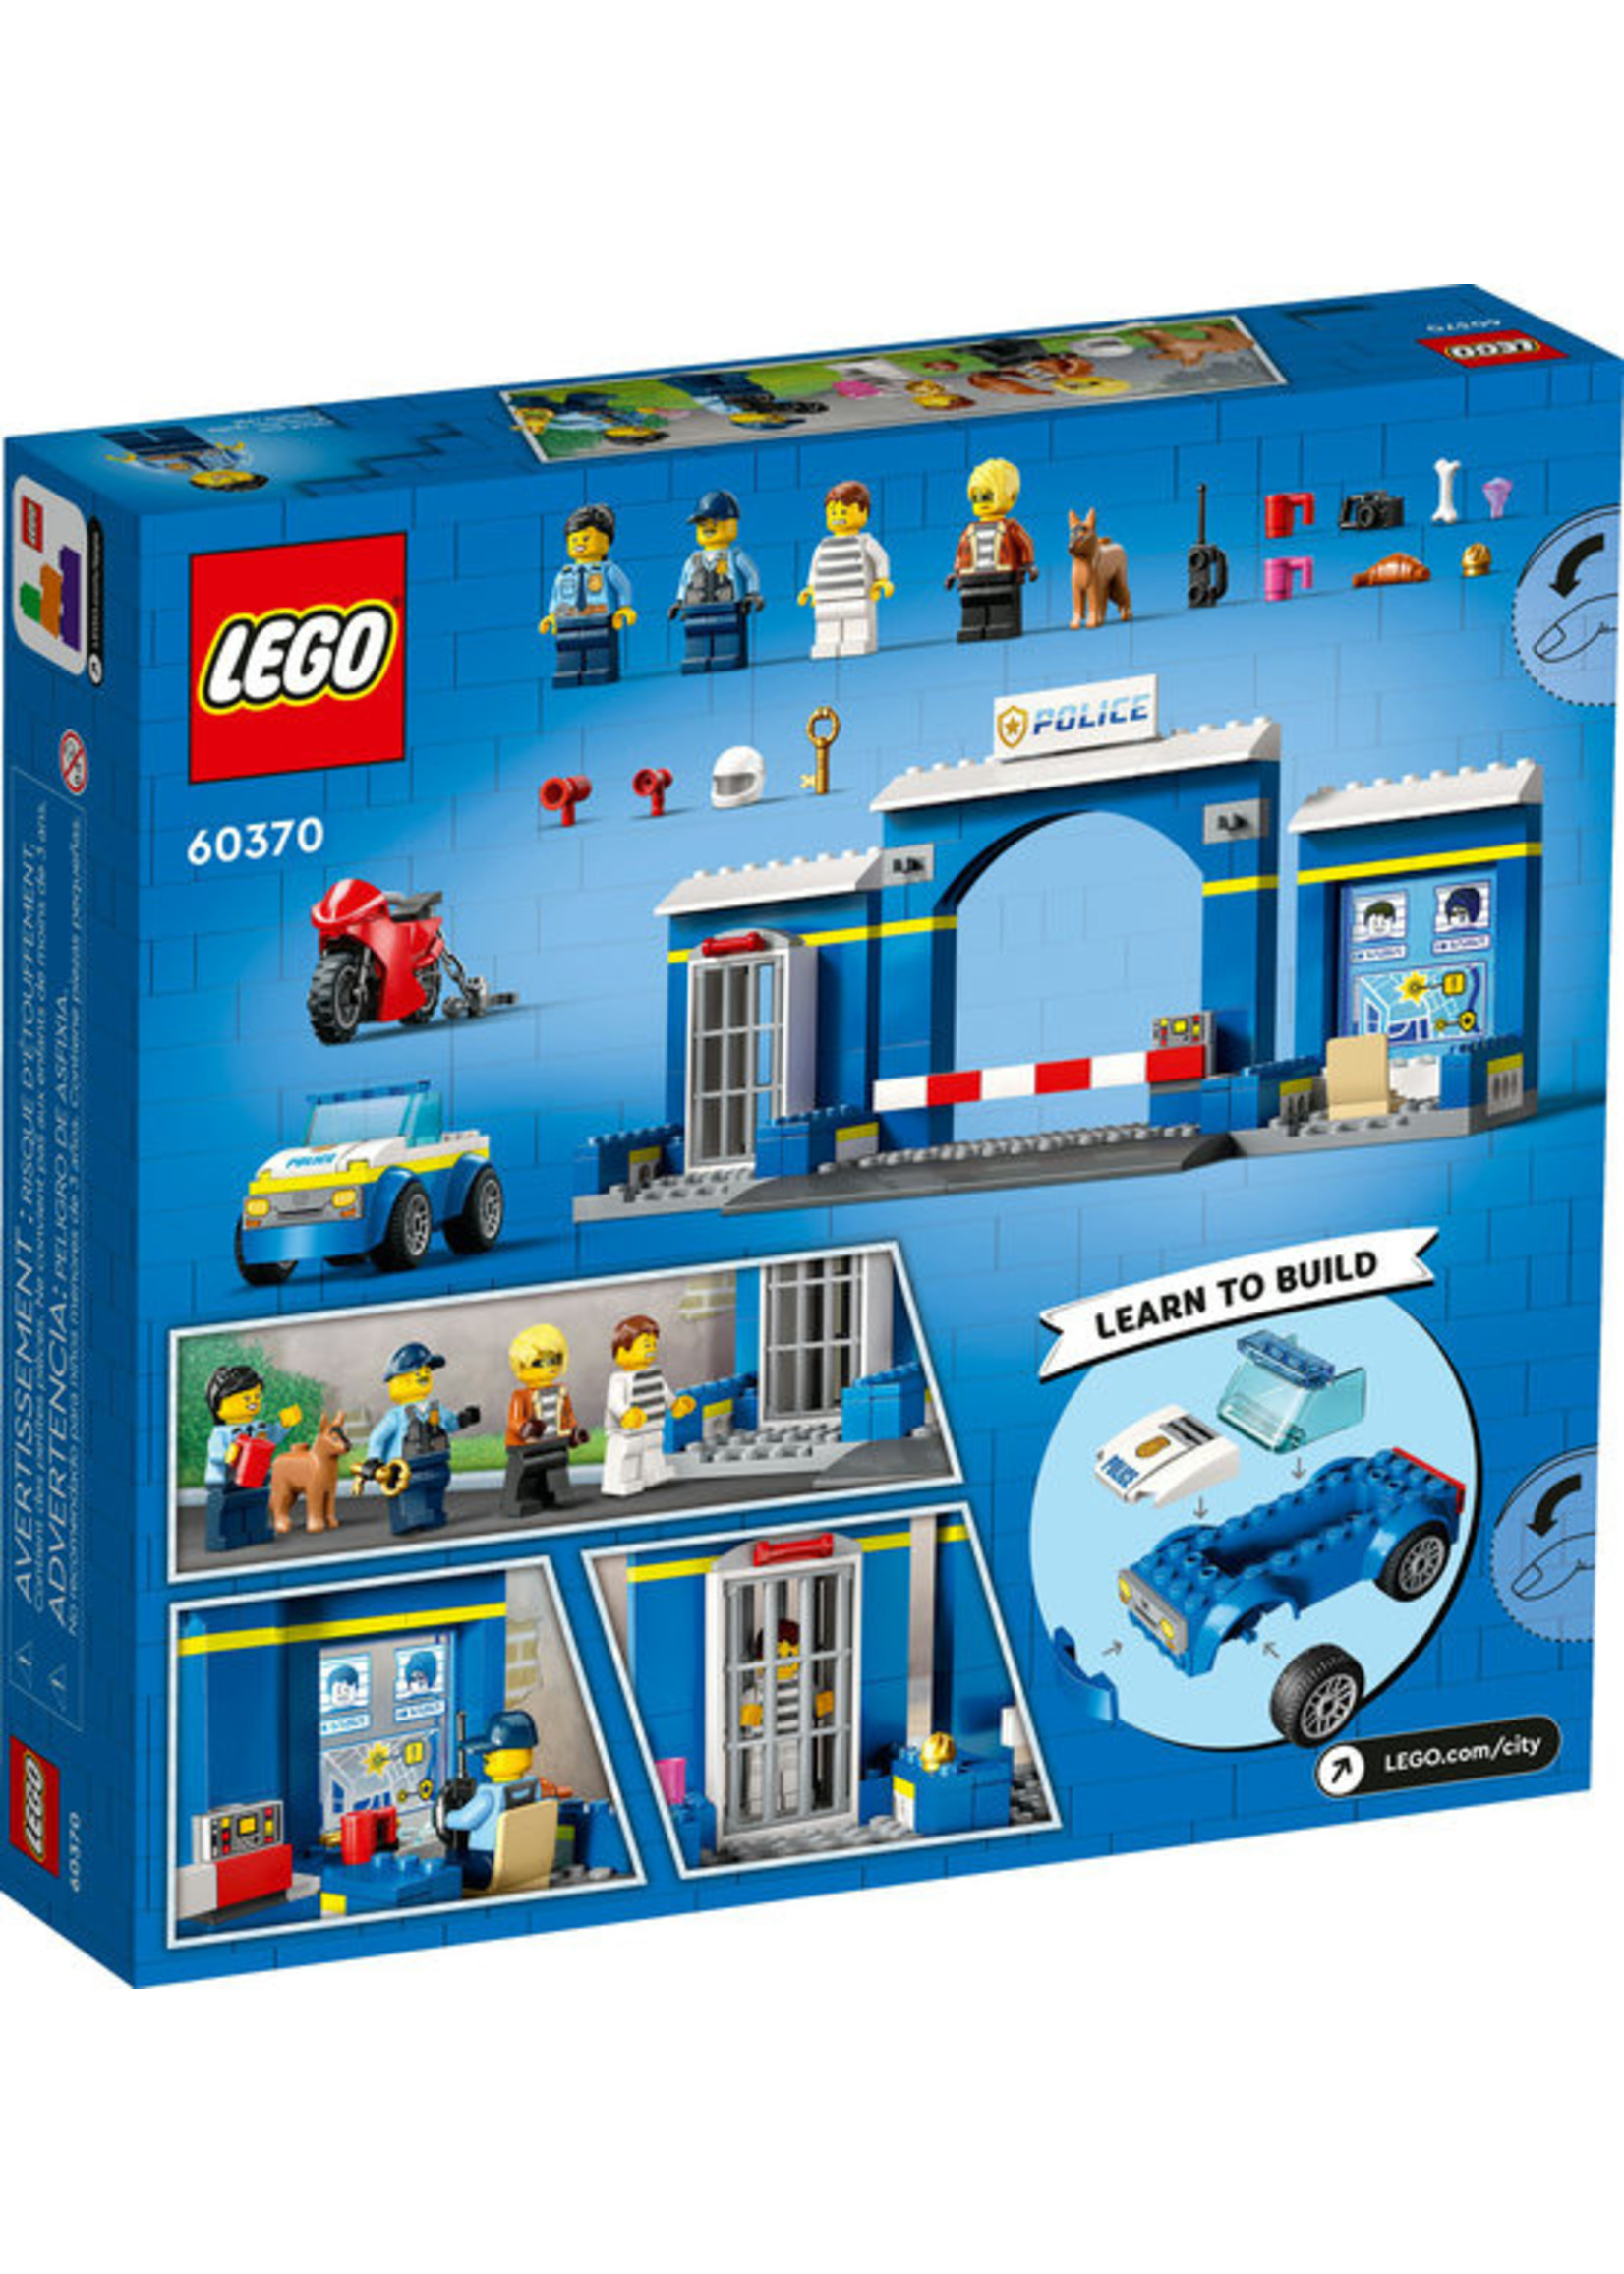 Building Kit Lego City - Police Station Chase